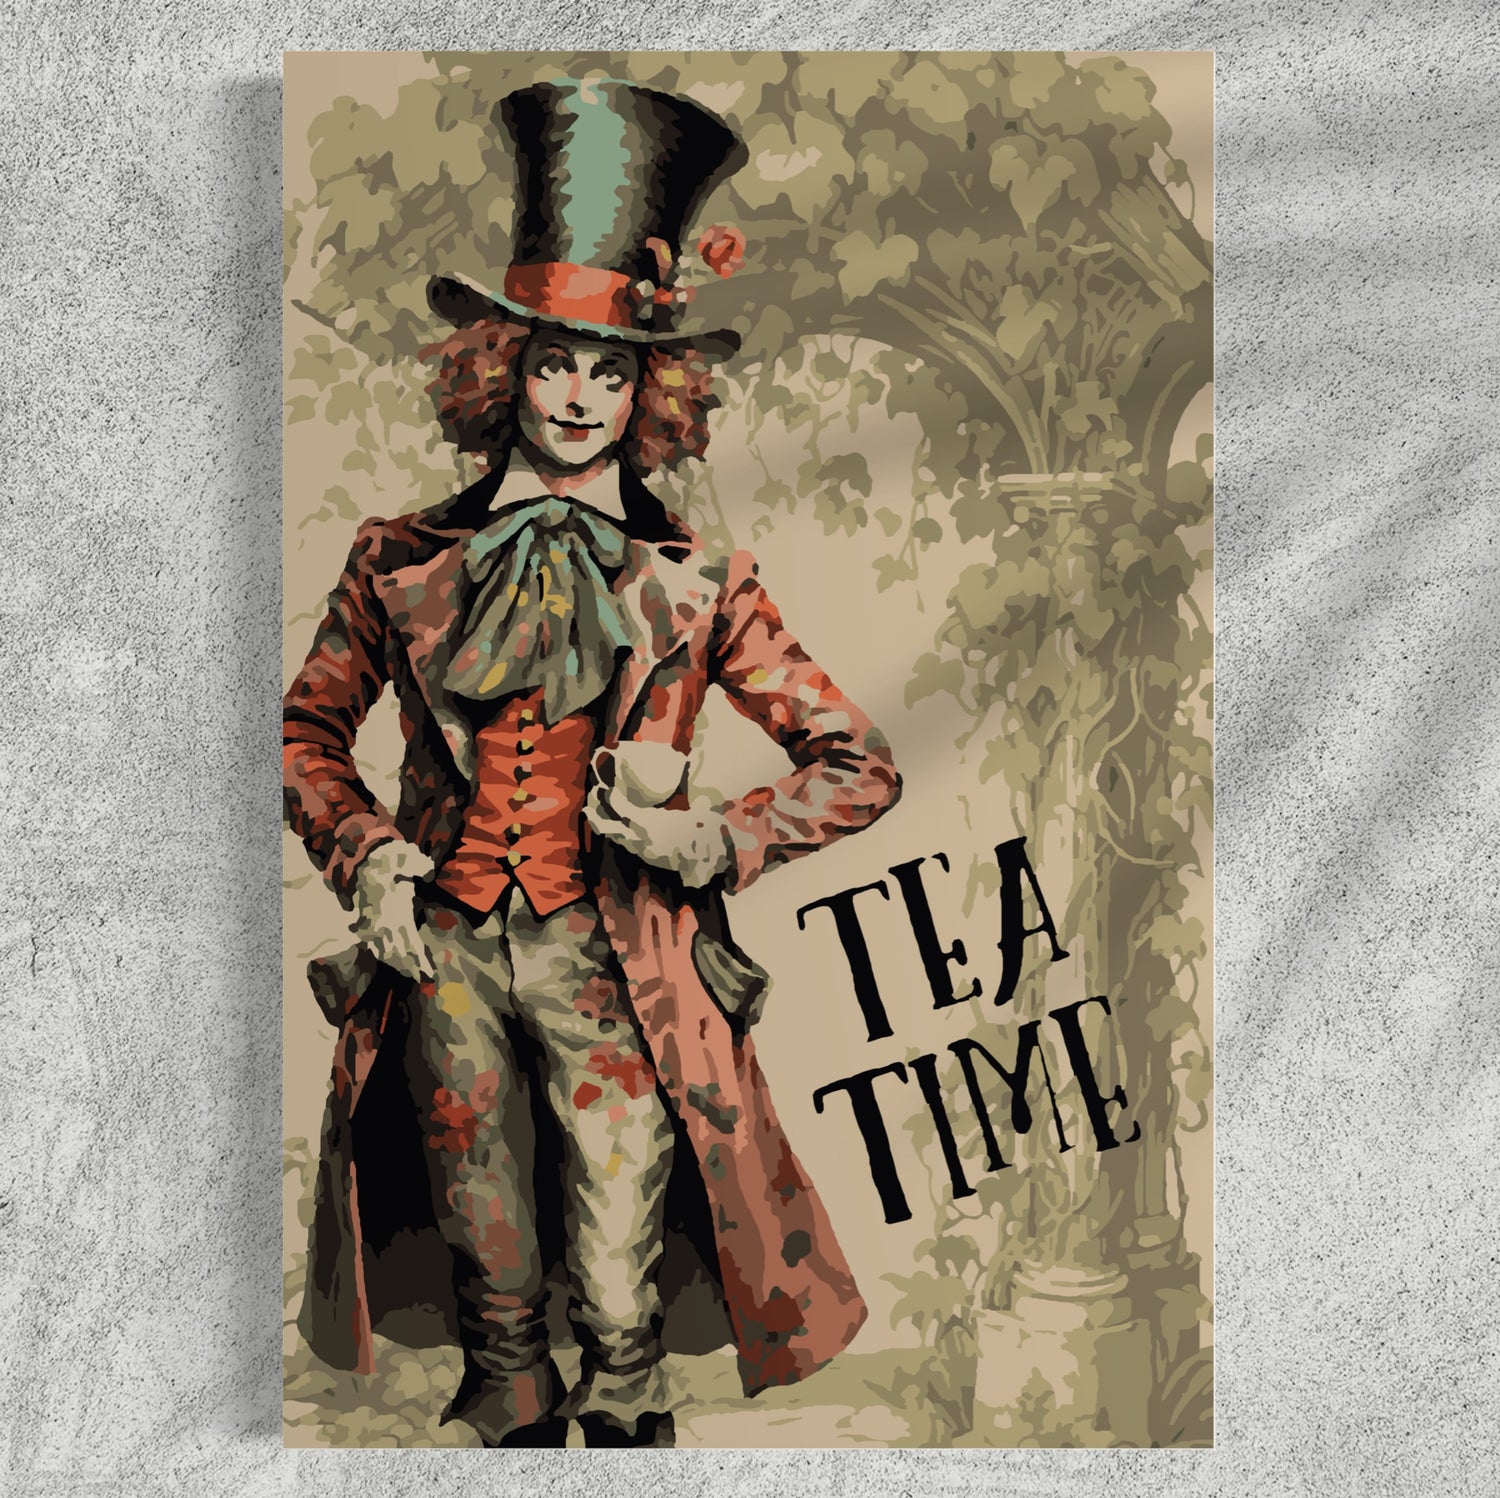 Vintage Tea Time - Paint By Numbers Kit